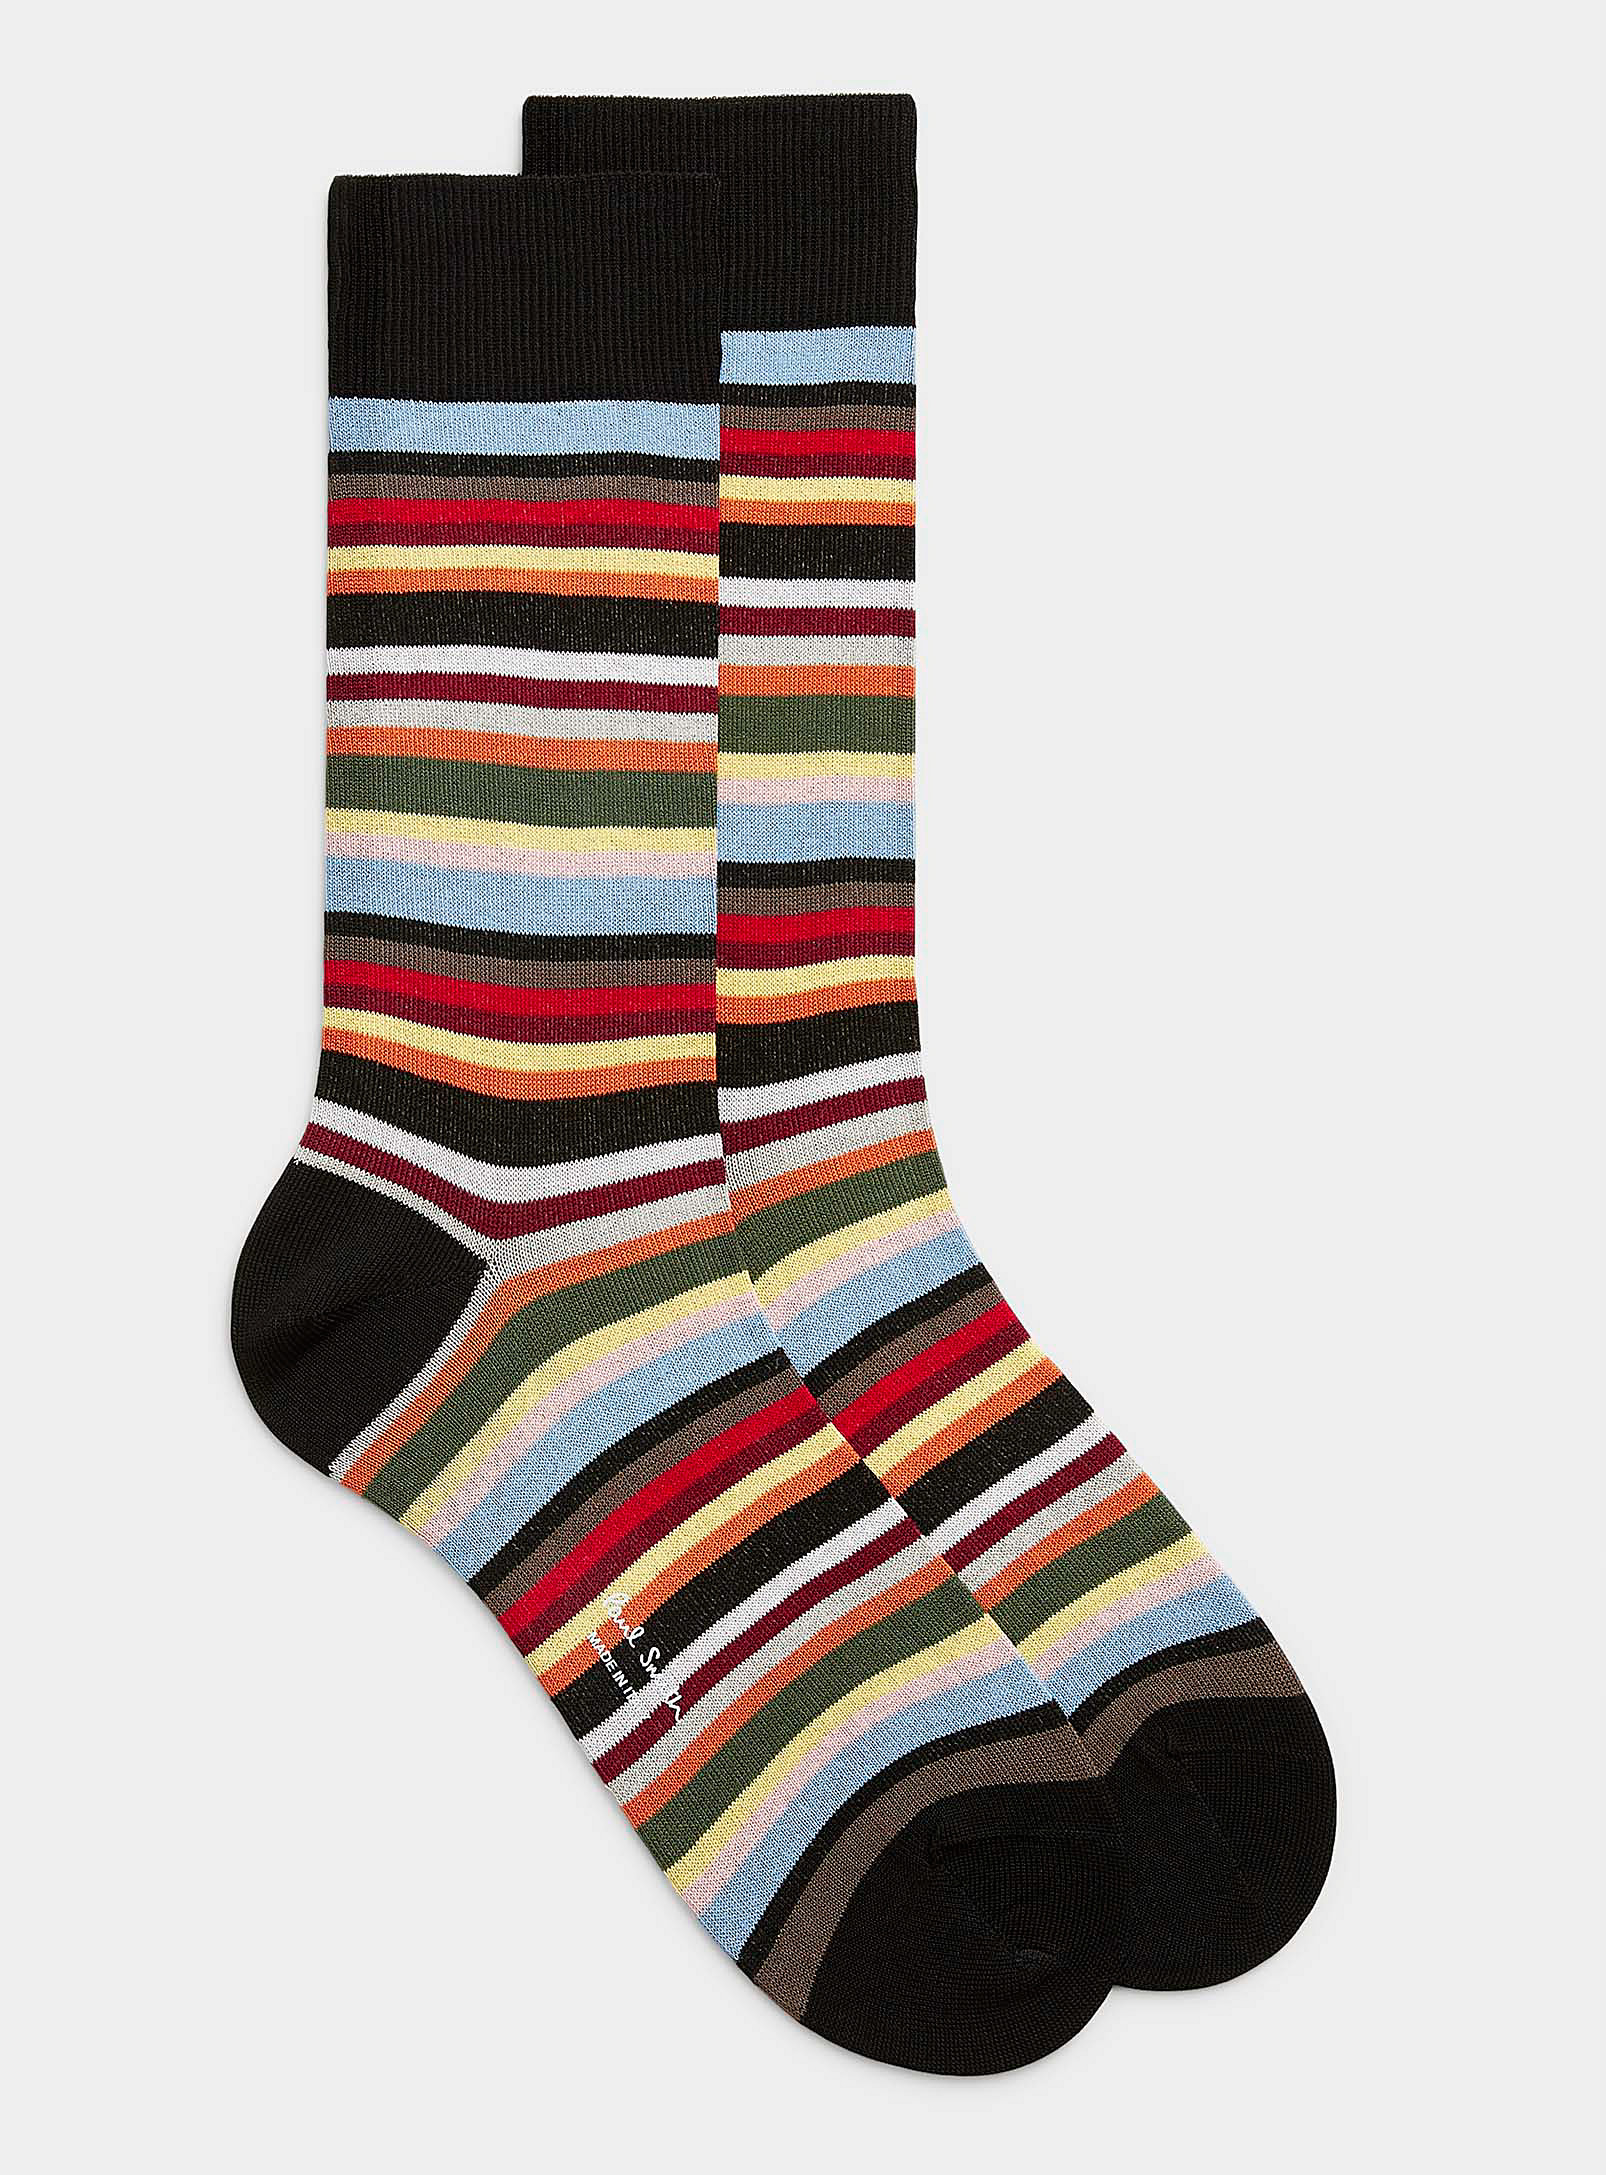 Paul Smith Candy Stripe Sock In Black